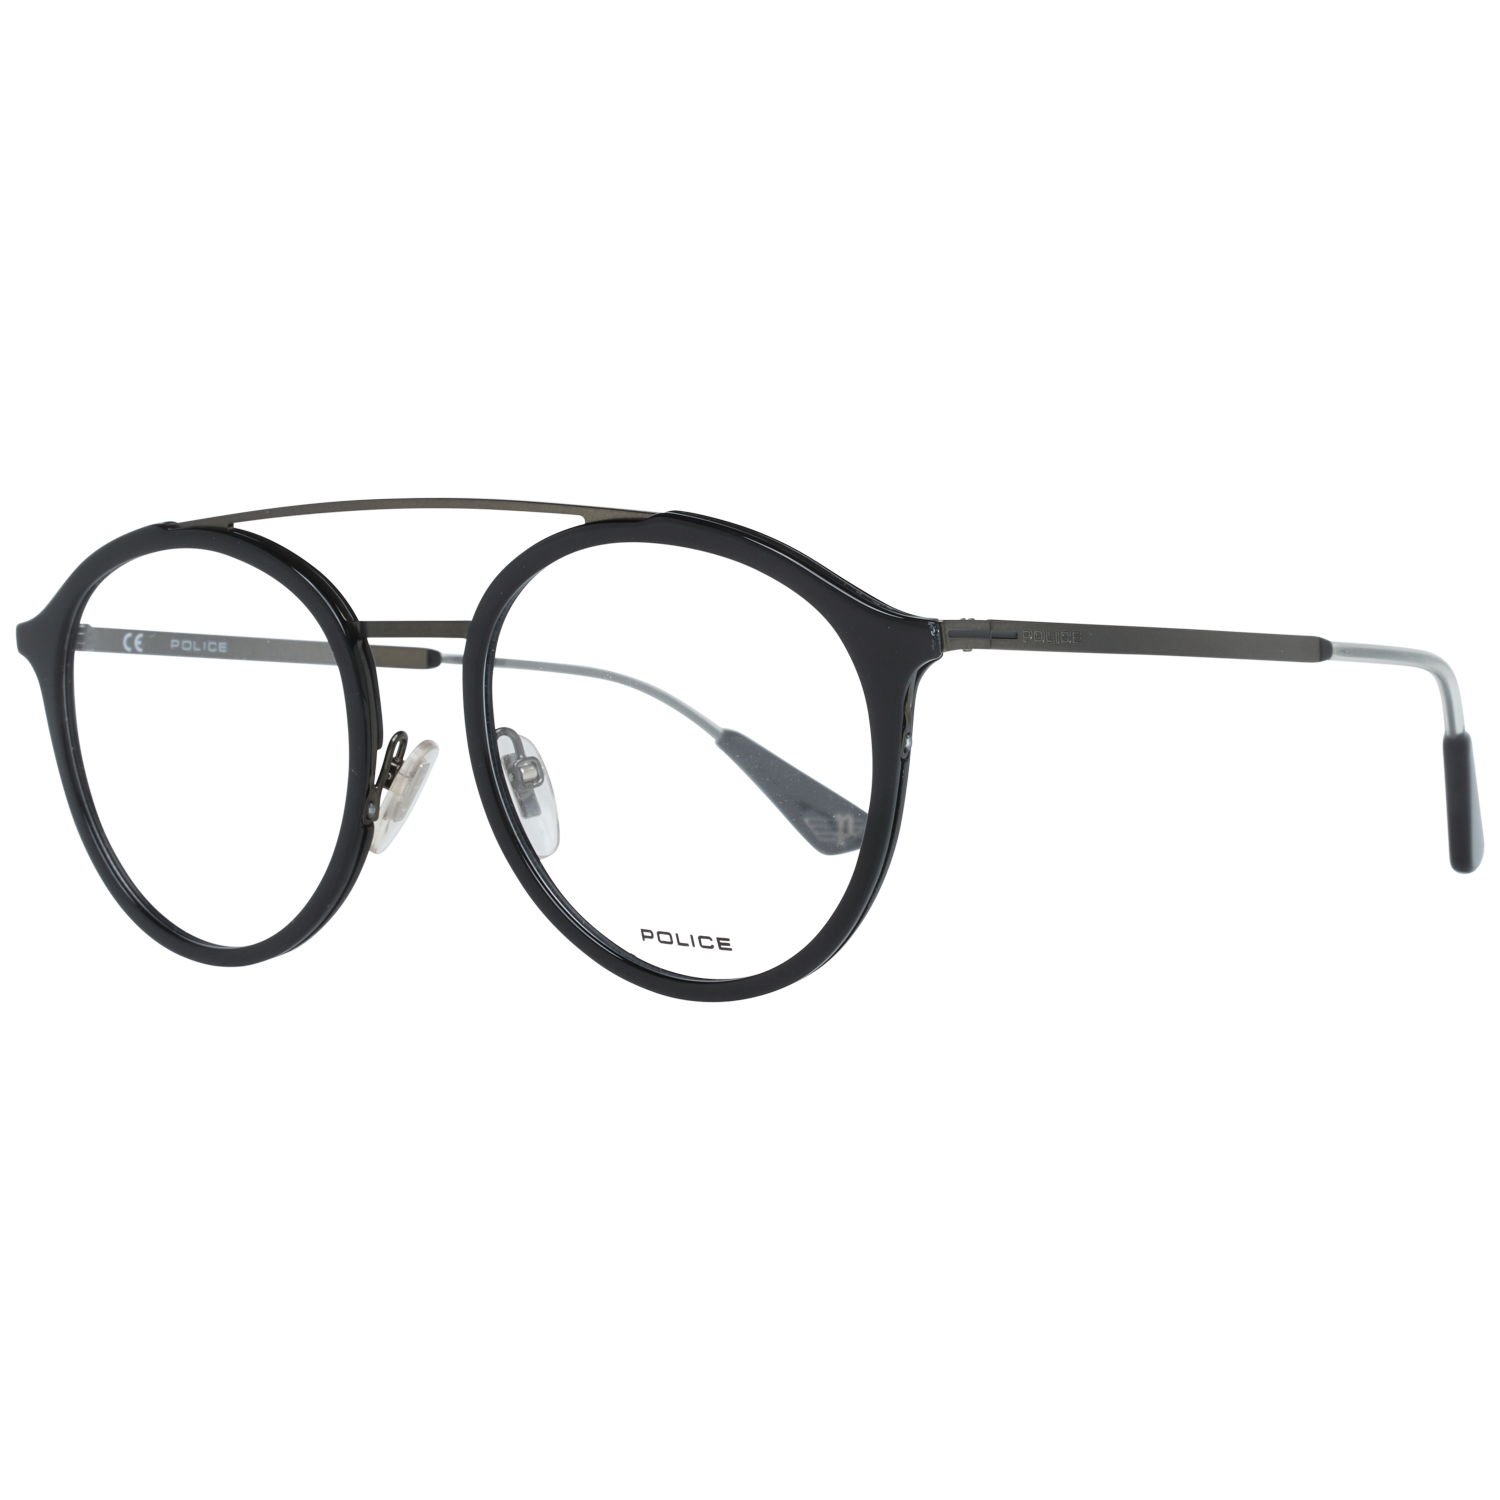 Police Frames Police Glasses Frames VPL688 0700 52 Eyeglasses Eyewear UK USA Australia 